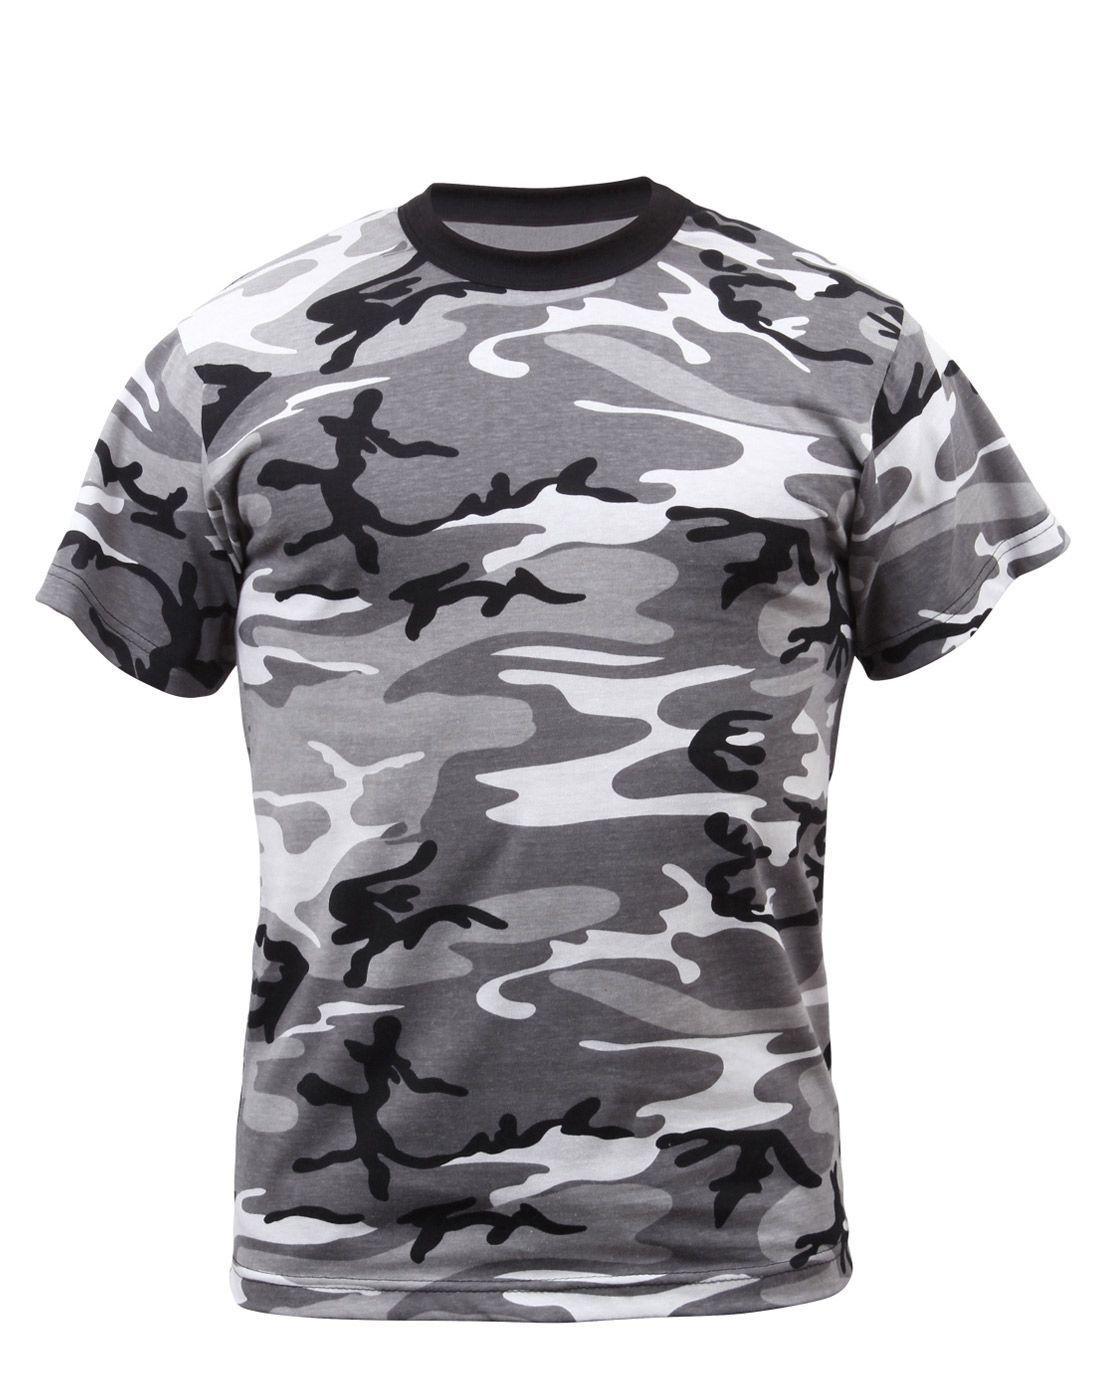 Rothco T-shirt - Mange Camouflager (Urban Camo, M)